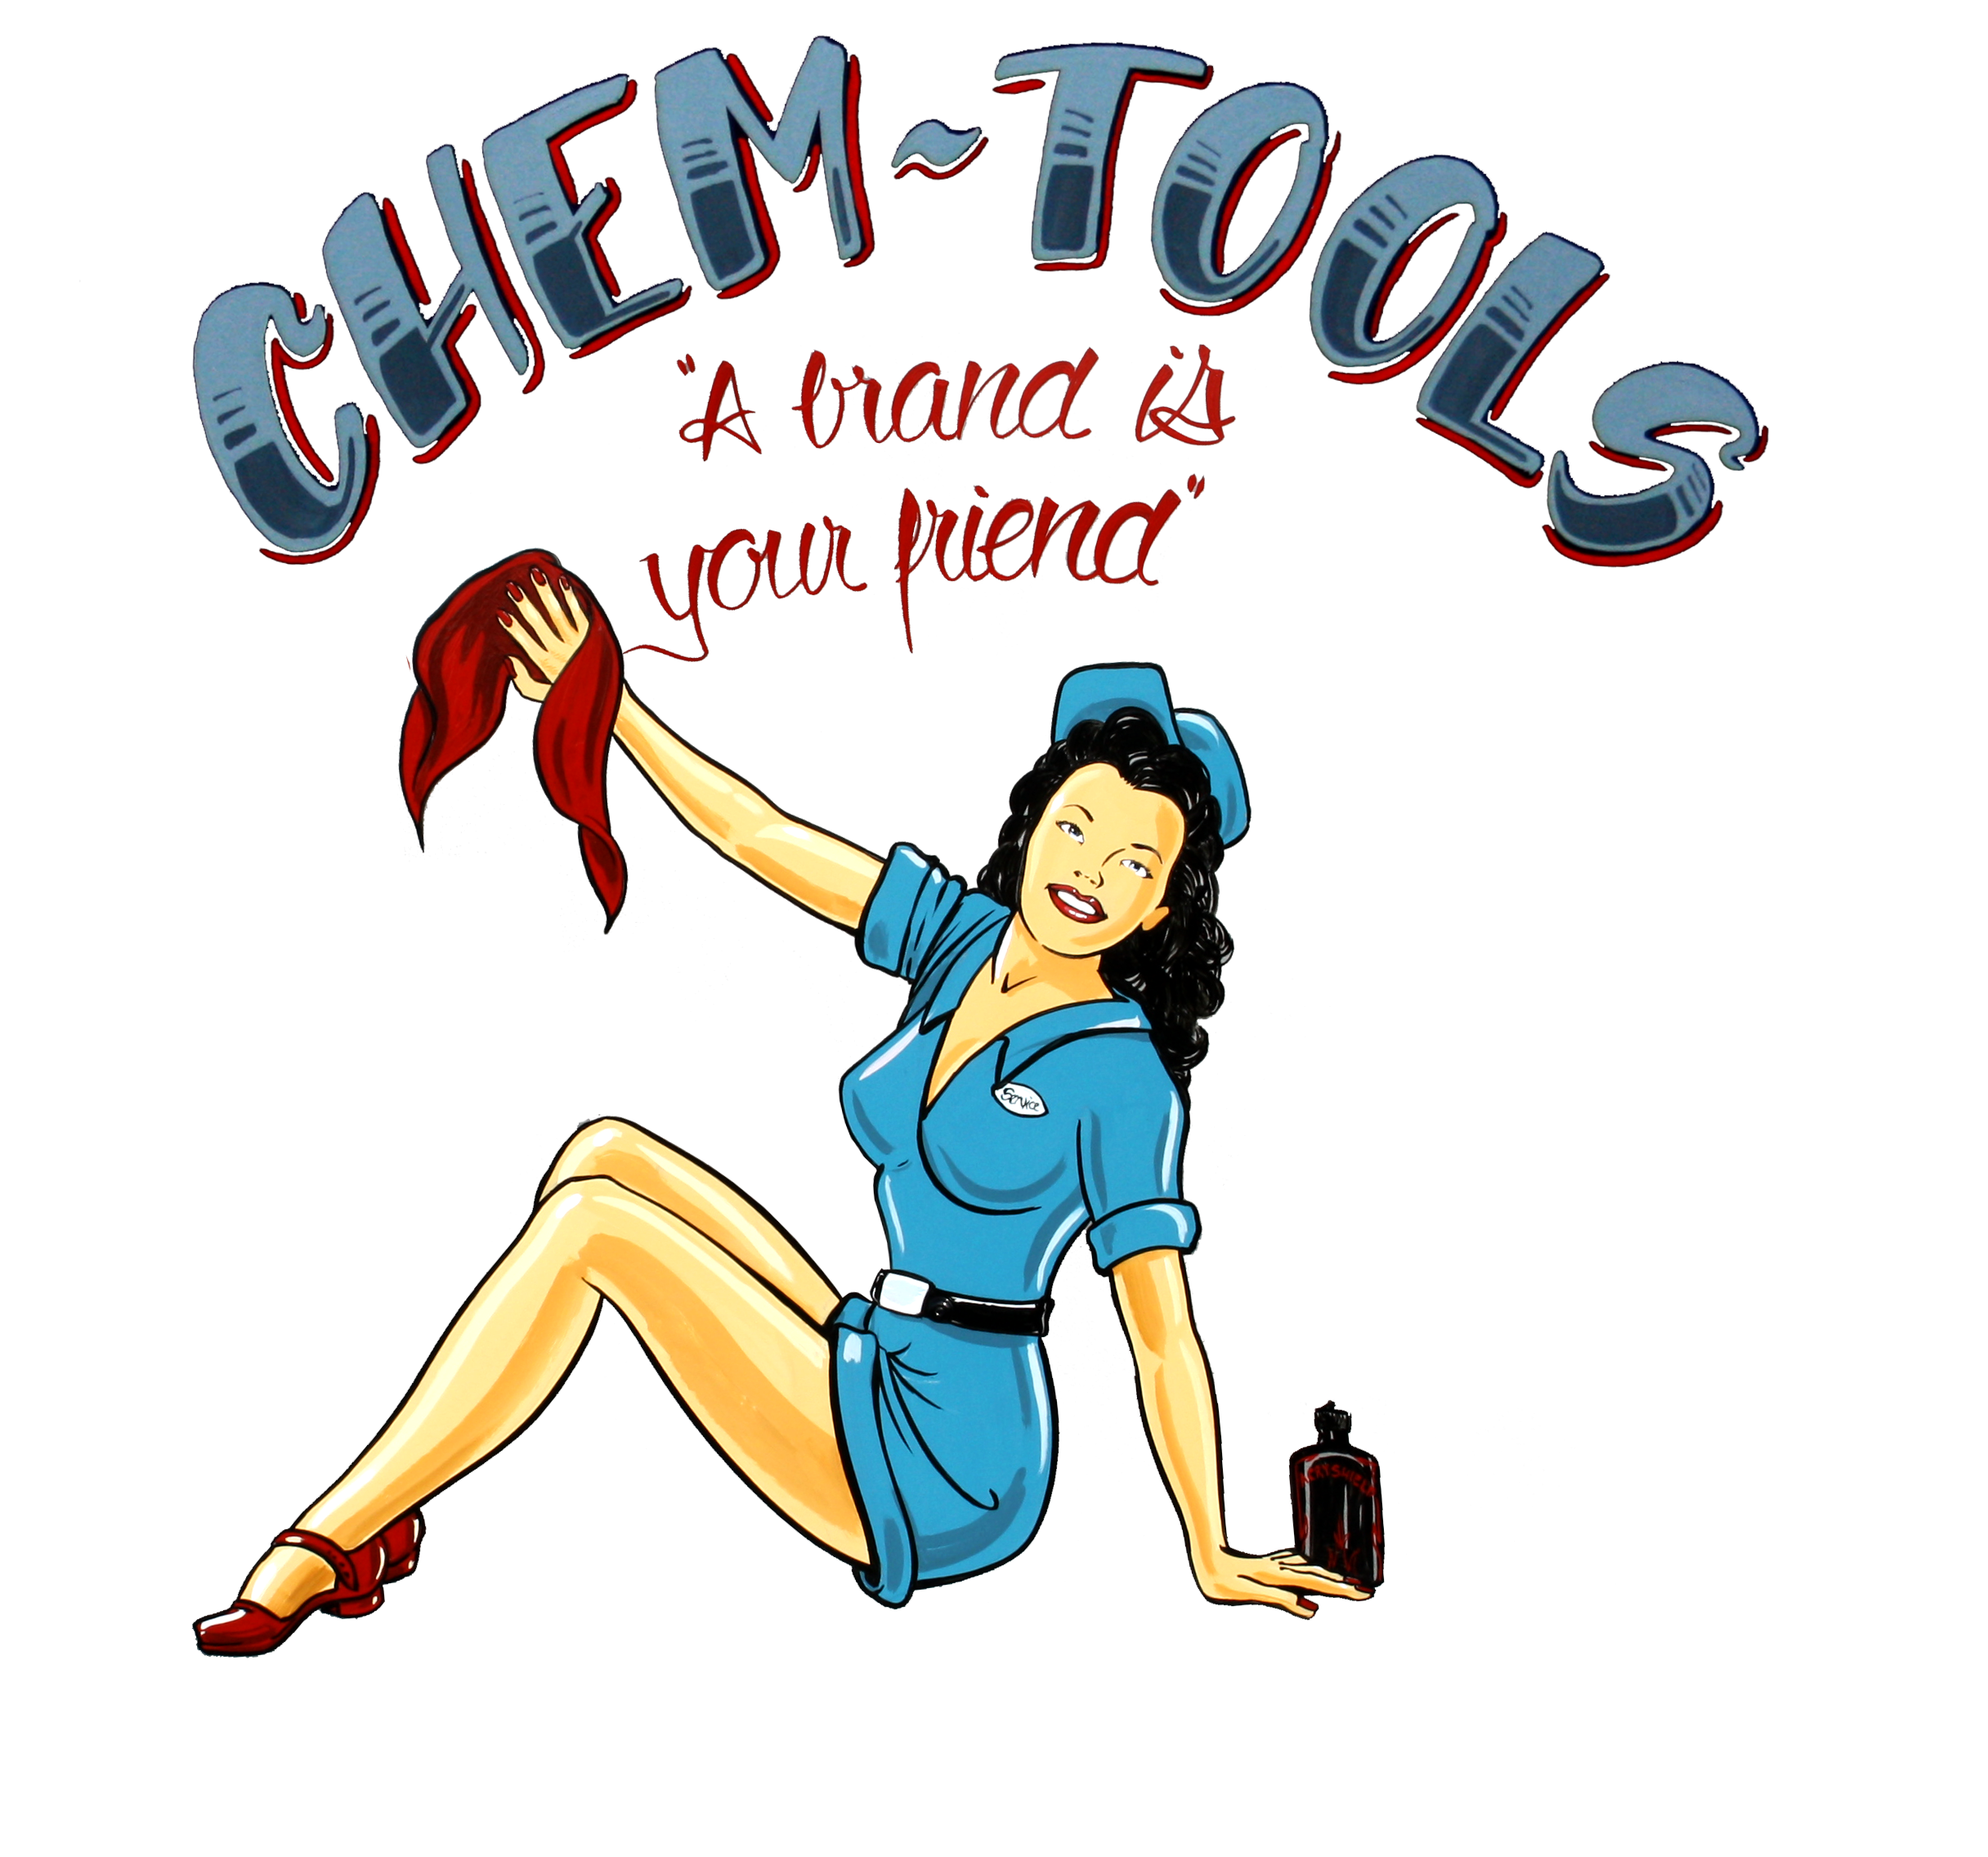 Chem-Tools